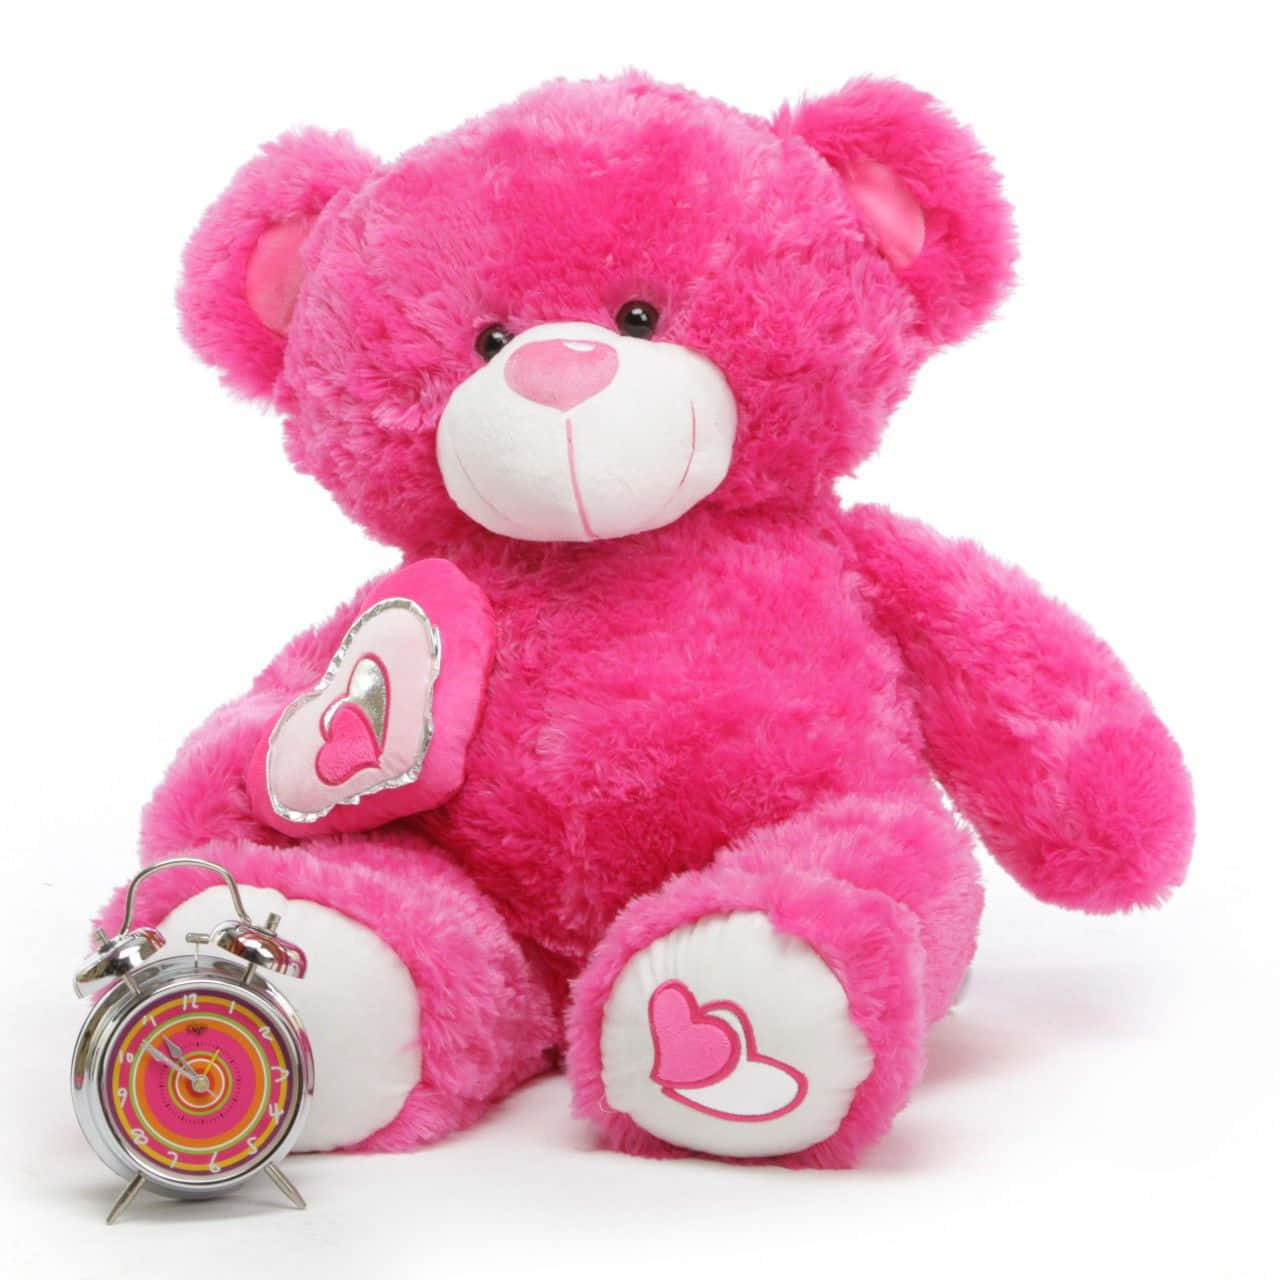 Cute Pink Teddy Bear Alarm Clock Wallpaper